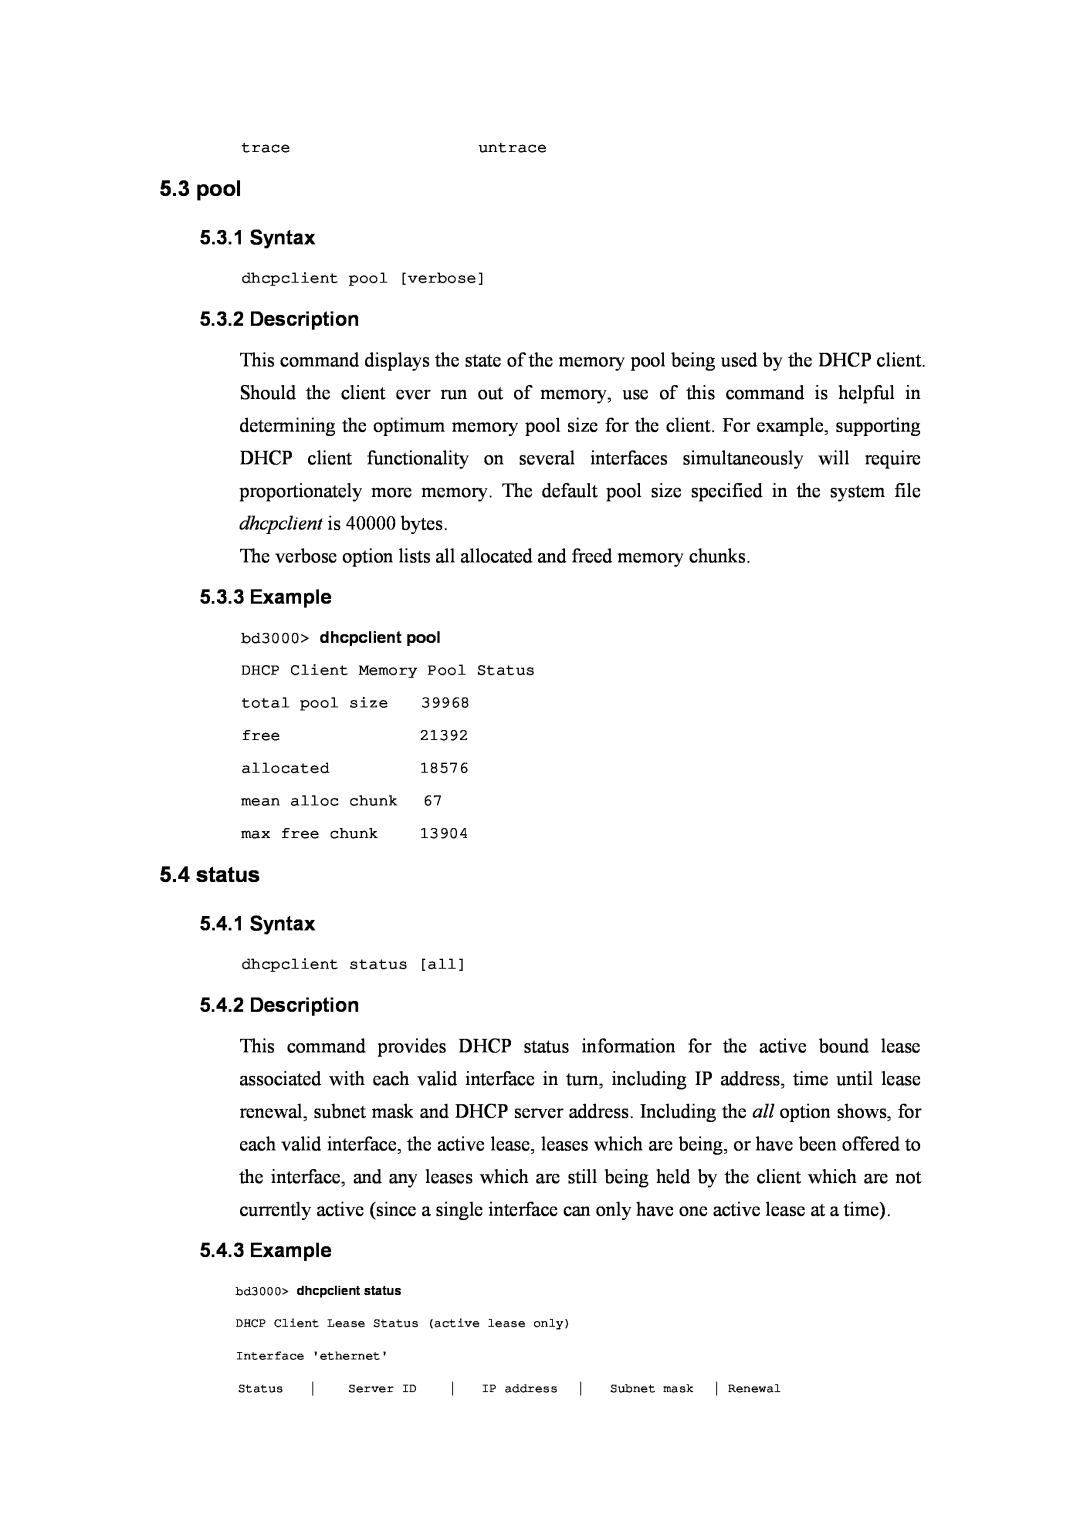 Atlantis Land A02-RA(Atmos)_ME01 manual pool, status, Syntax, Description, Example 